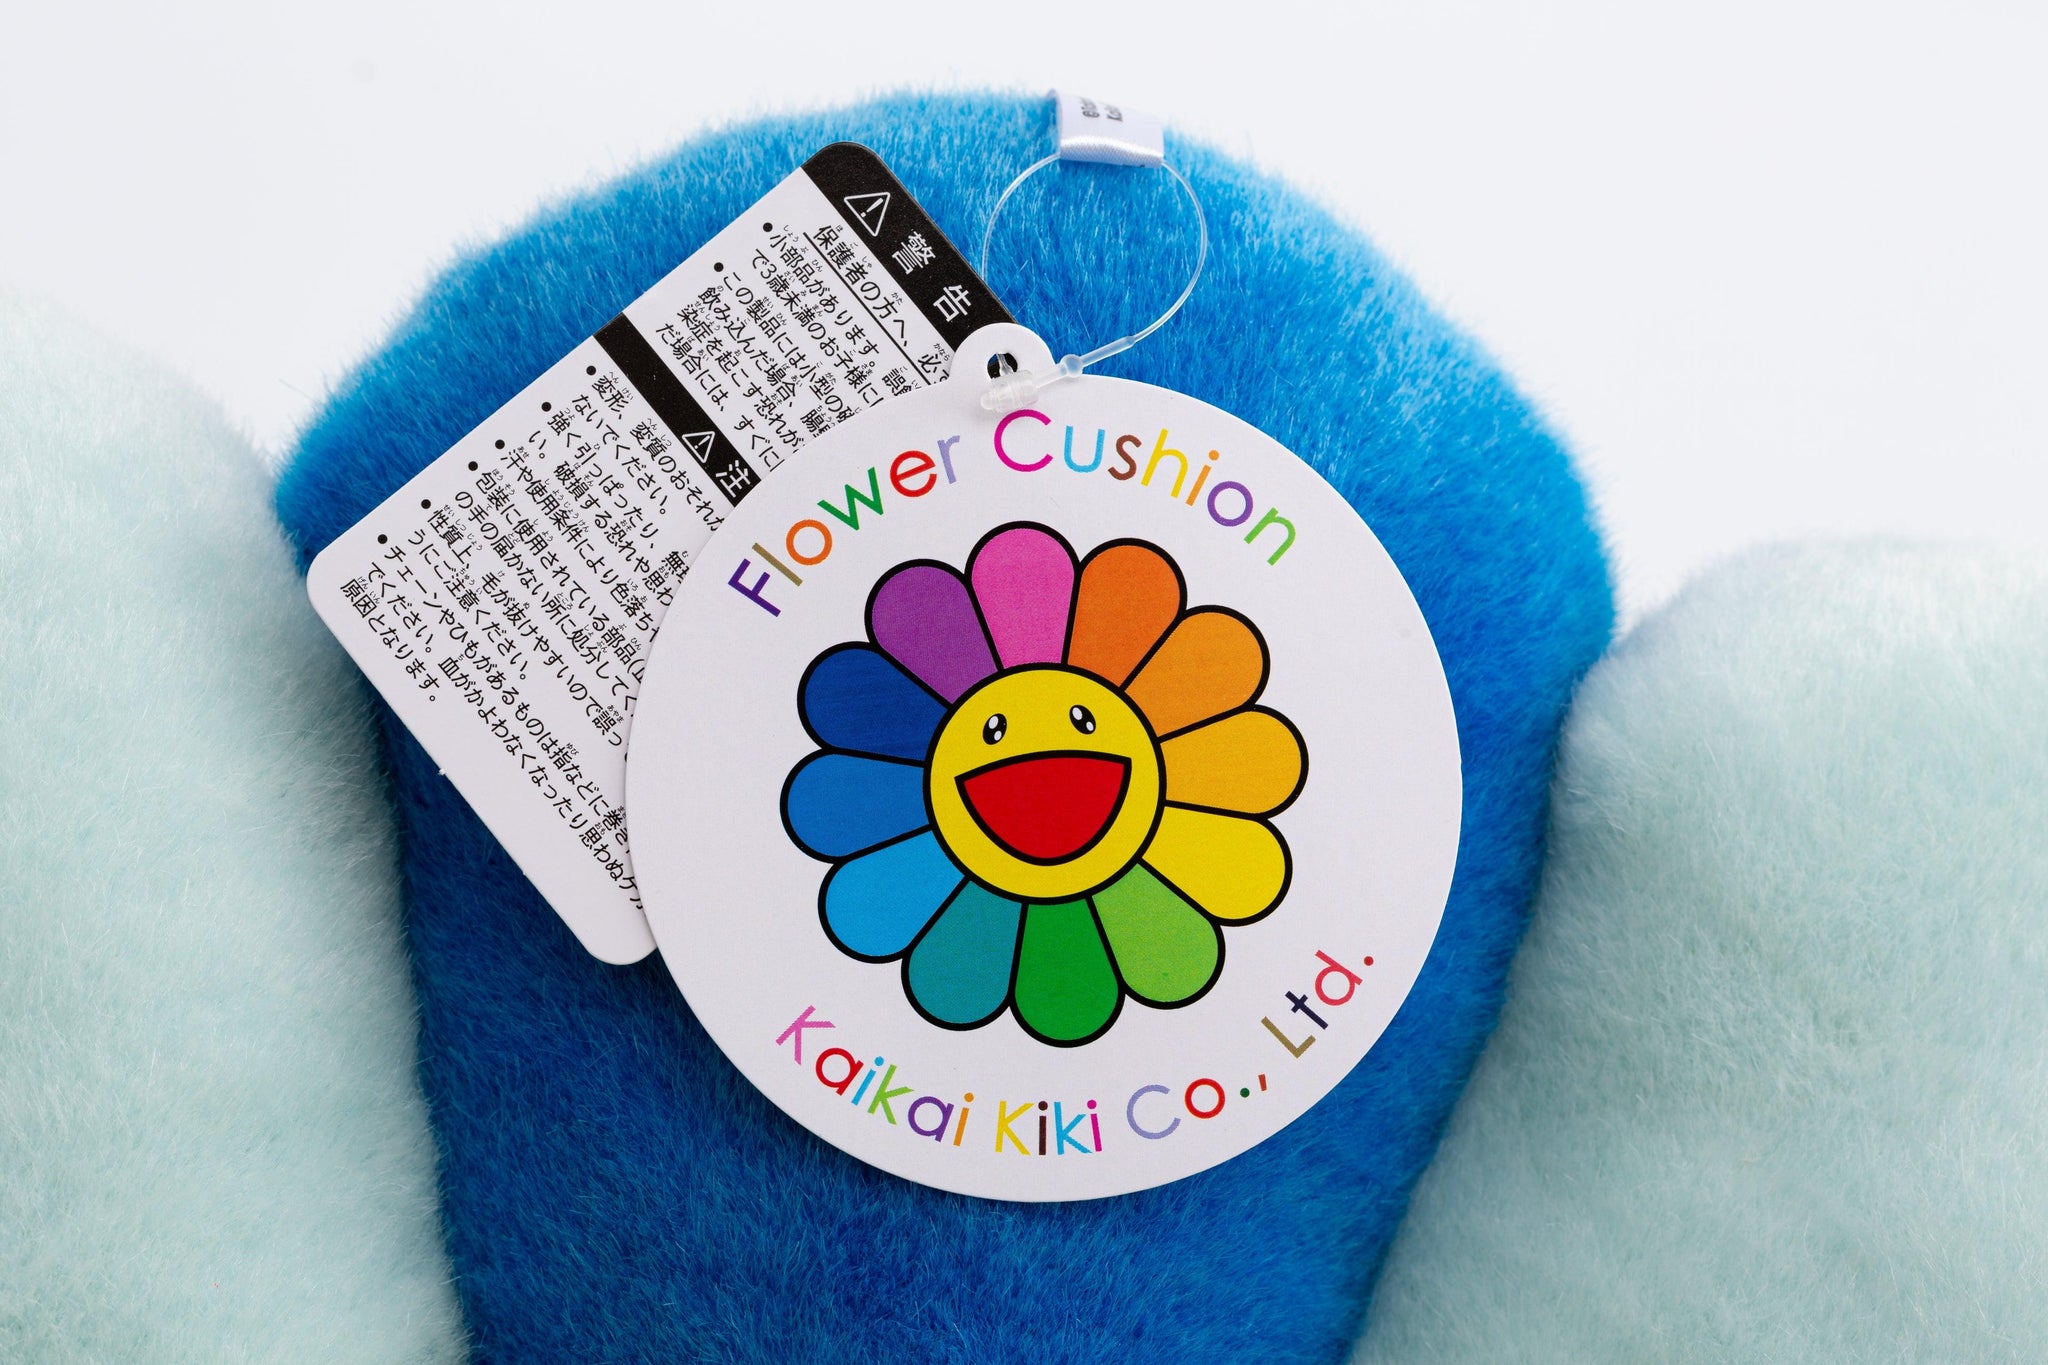 Takashi Murakami - Flower Cushion (Turquoise & Blue) - 30cm for Sale